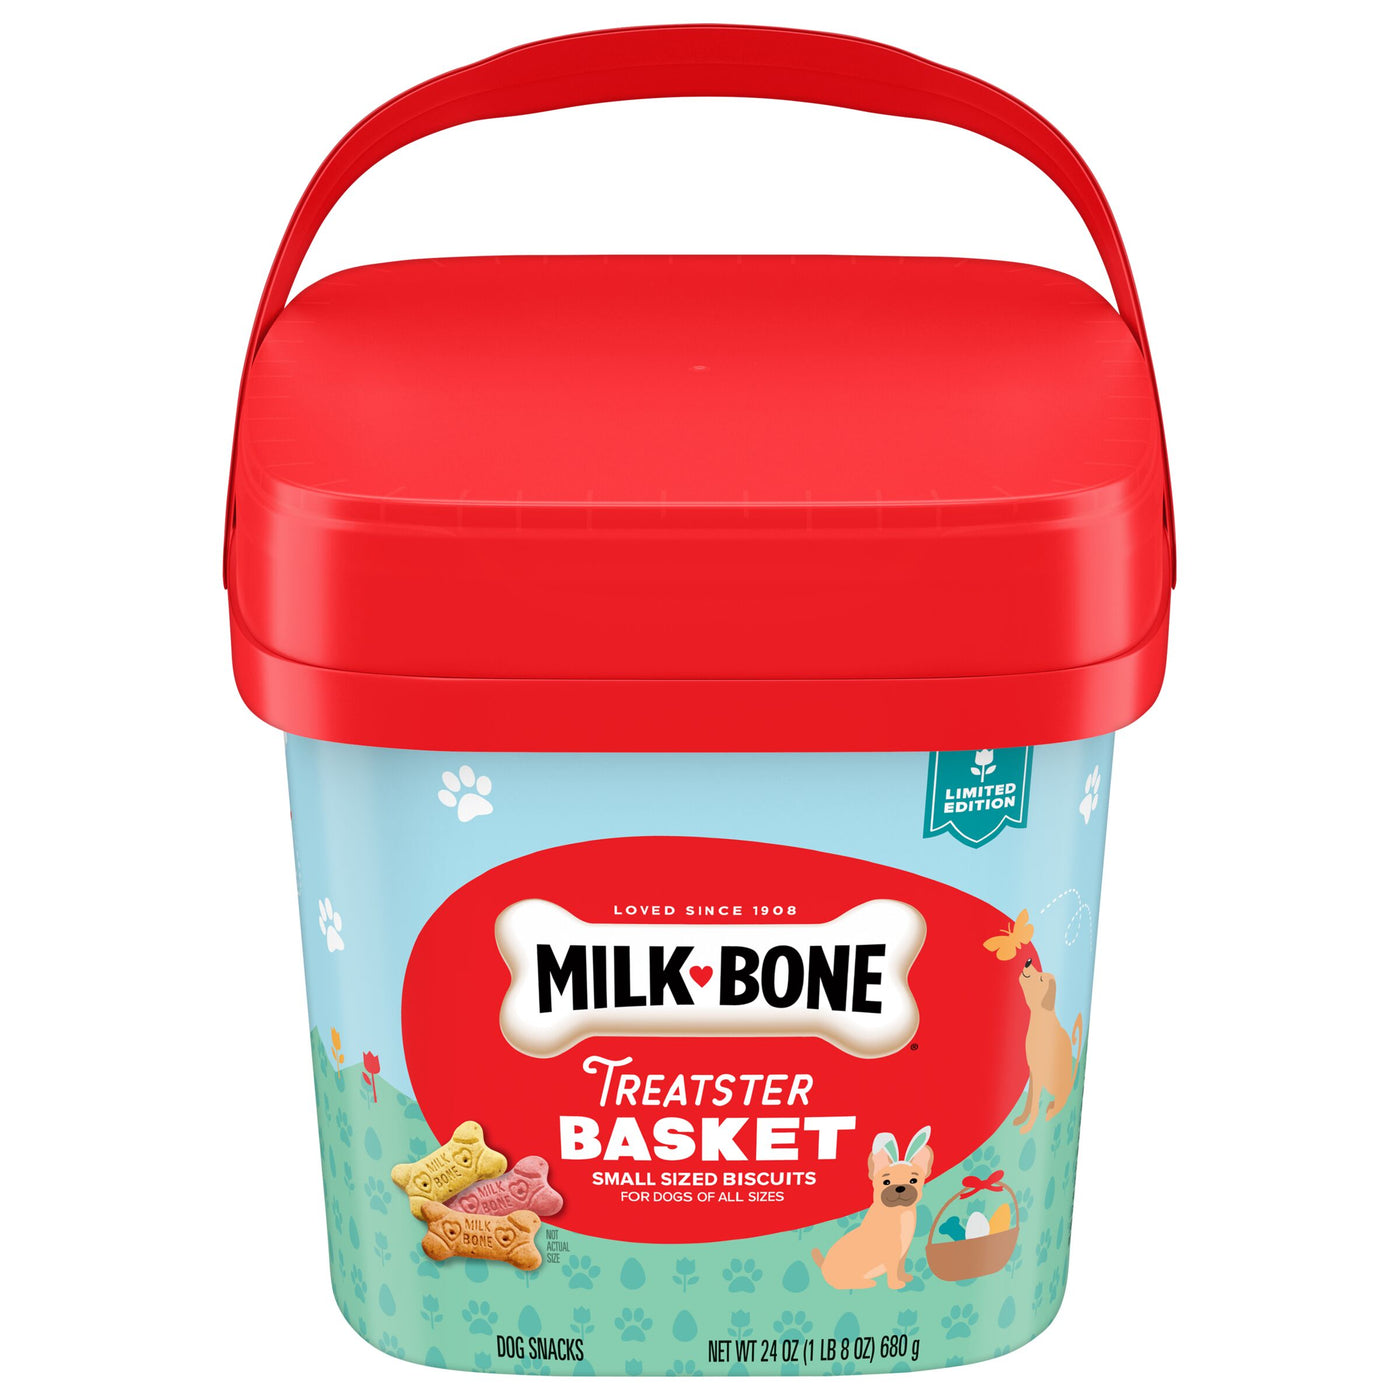 Milk-Bone Small Dog Biscuits, Limited-Edition Treatster Basket, 24 oz